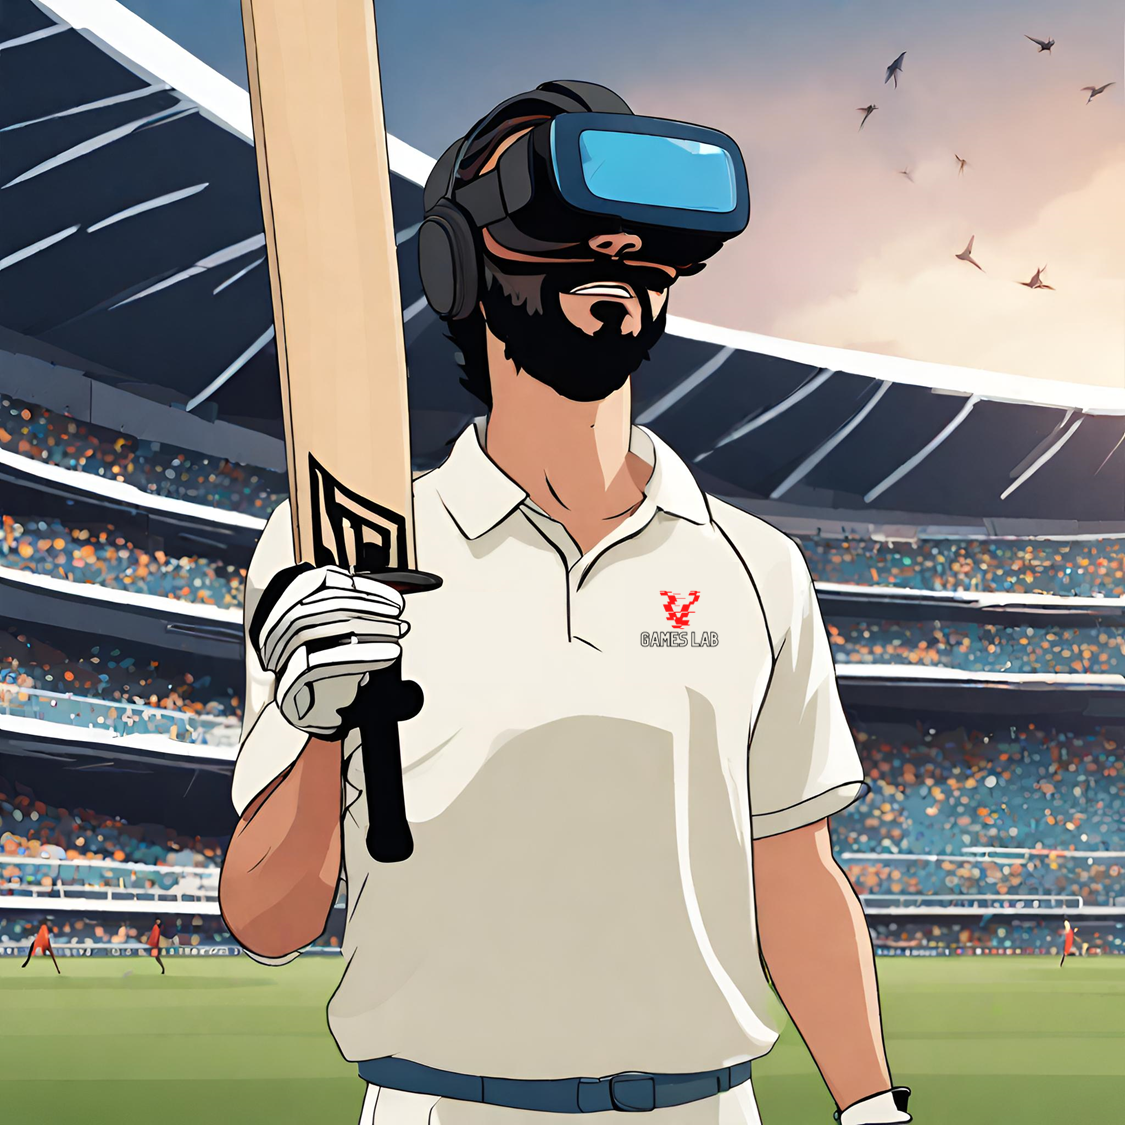 Man wearing VR headset in cricket stadium